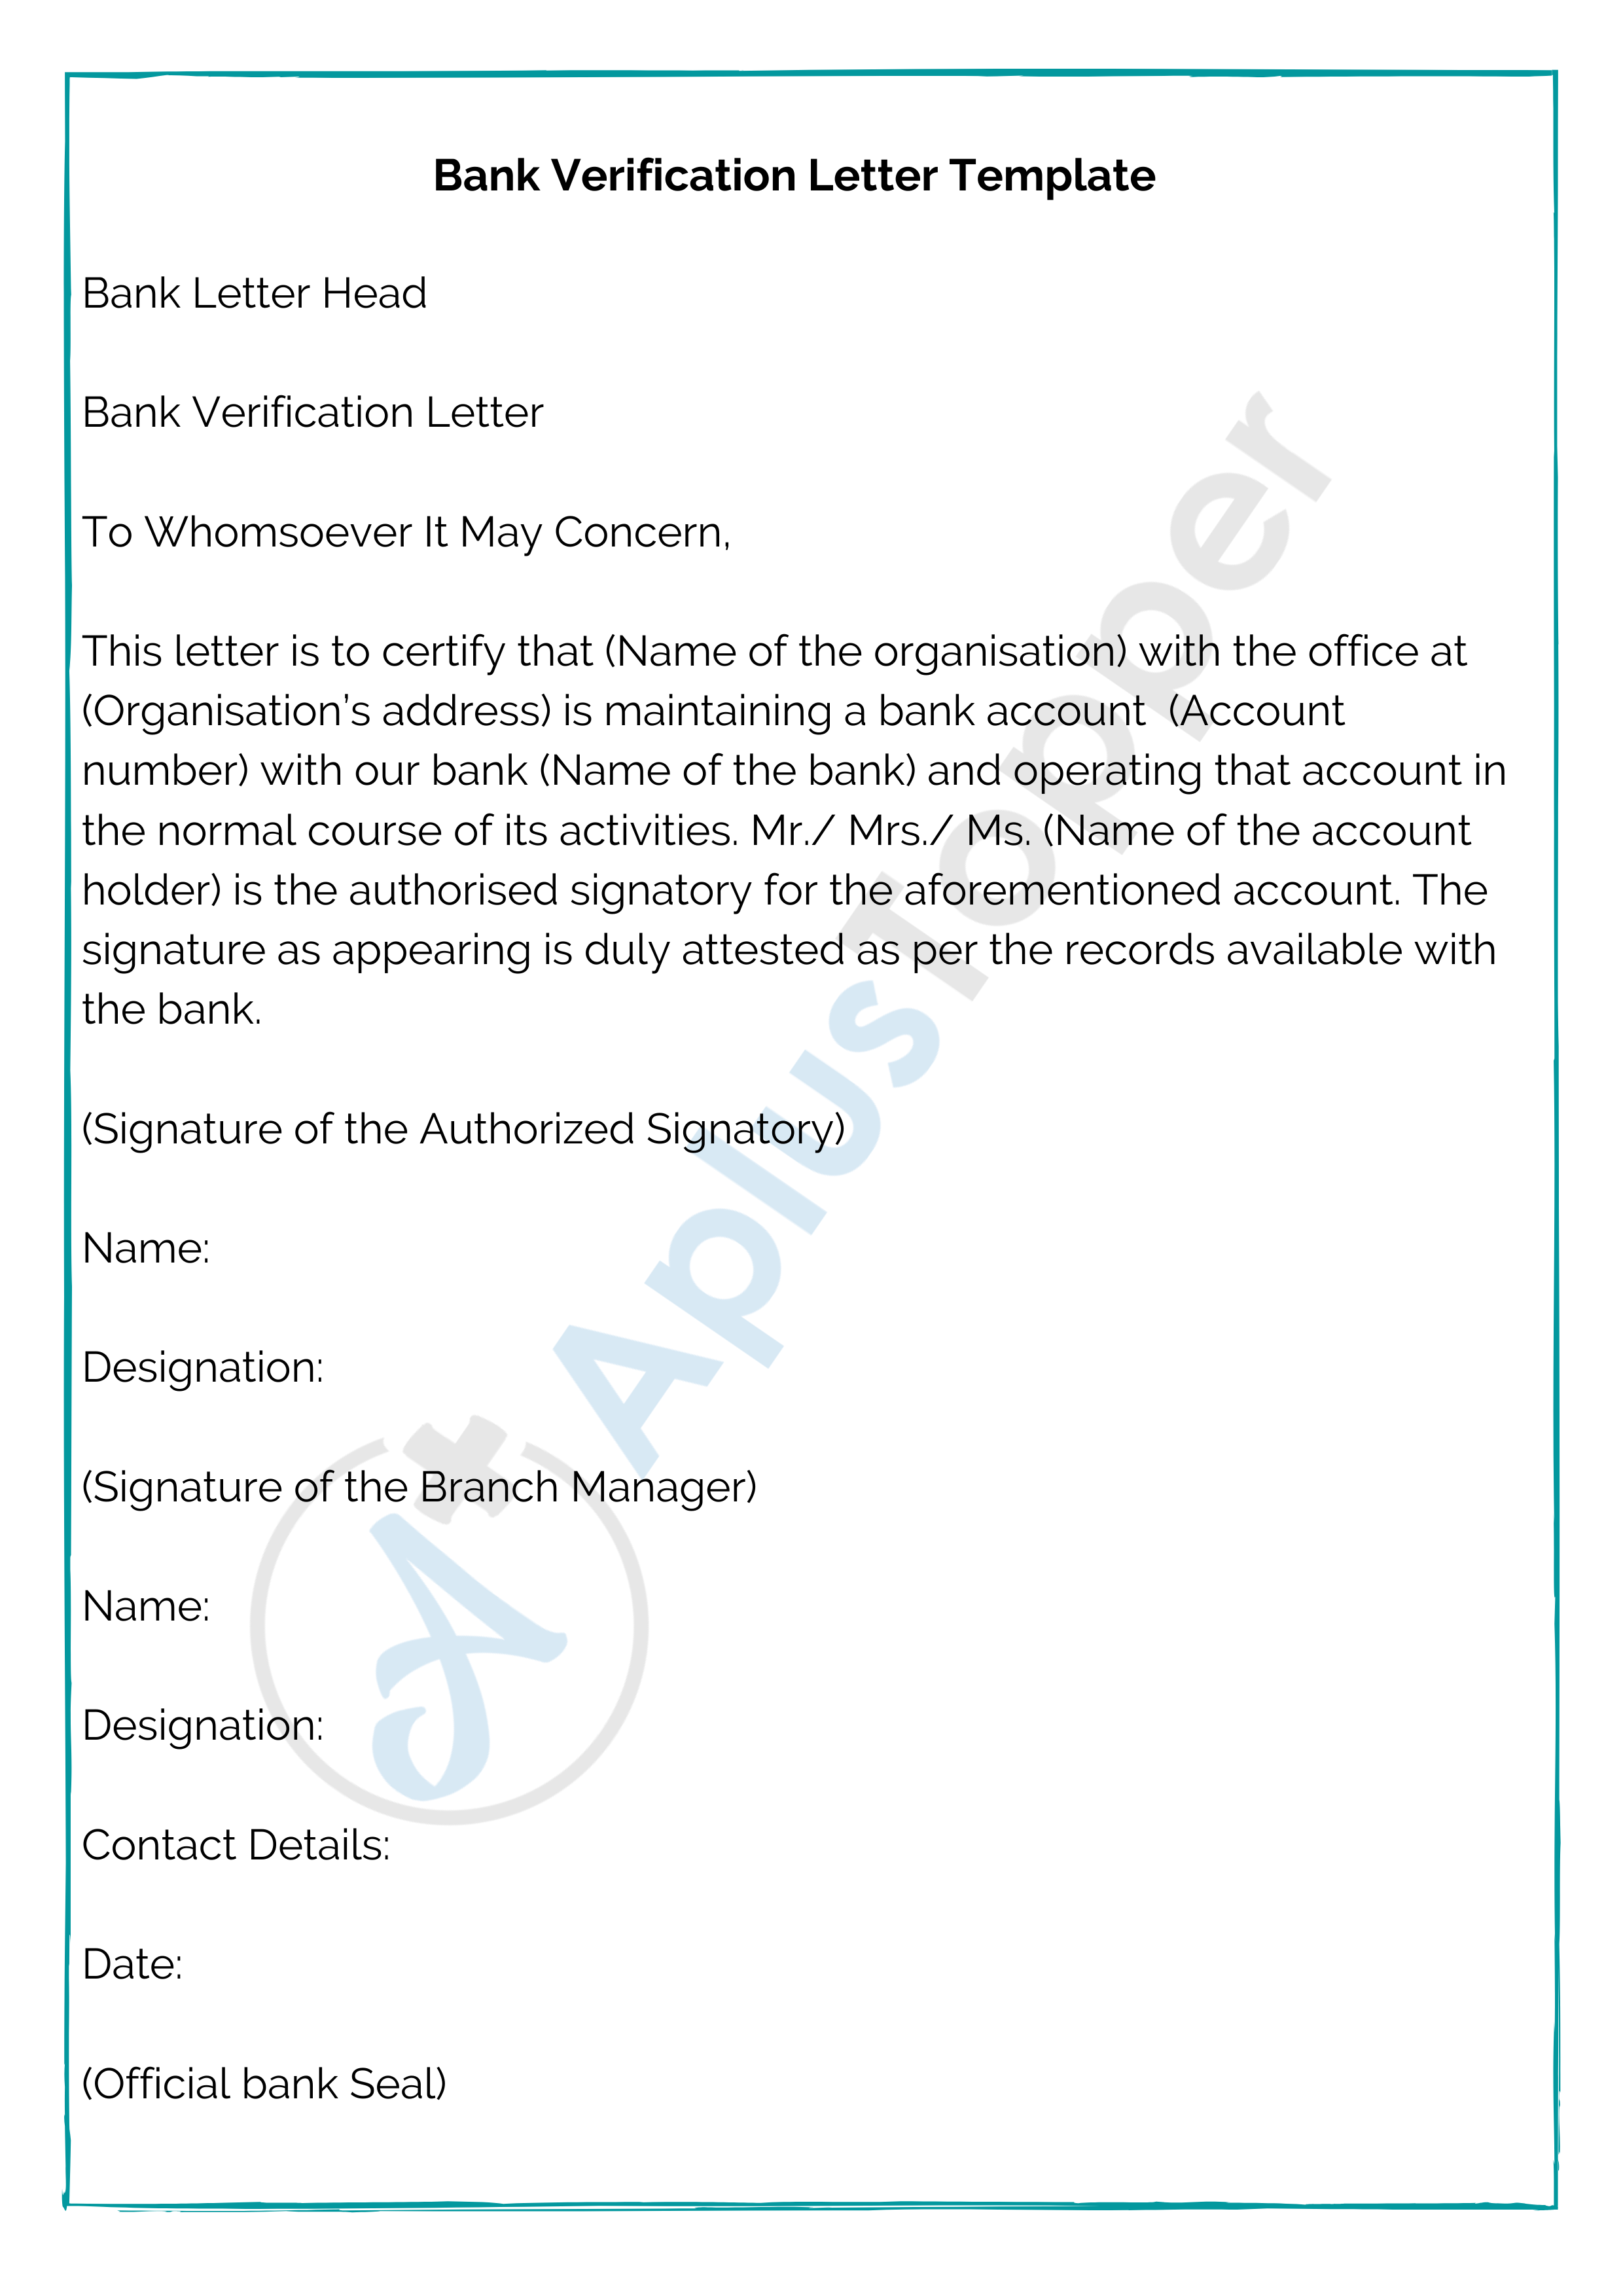 Bank Verification Letter | How To Write Bank Verification Letter?, Format, Samples - A Plus Topper